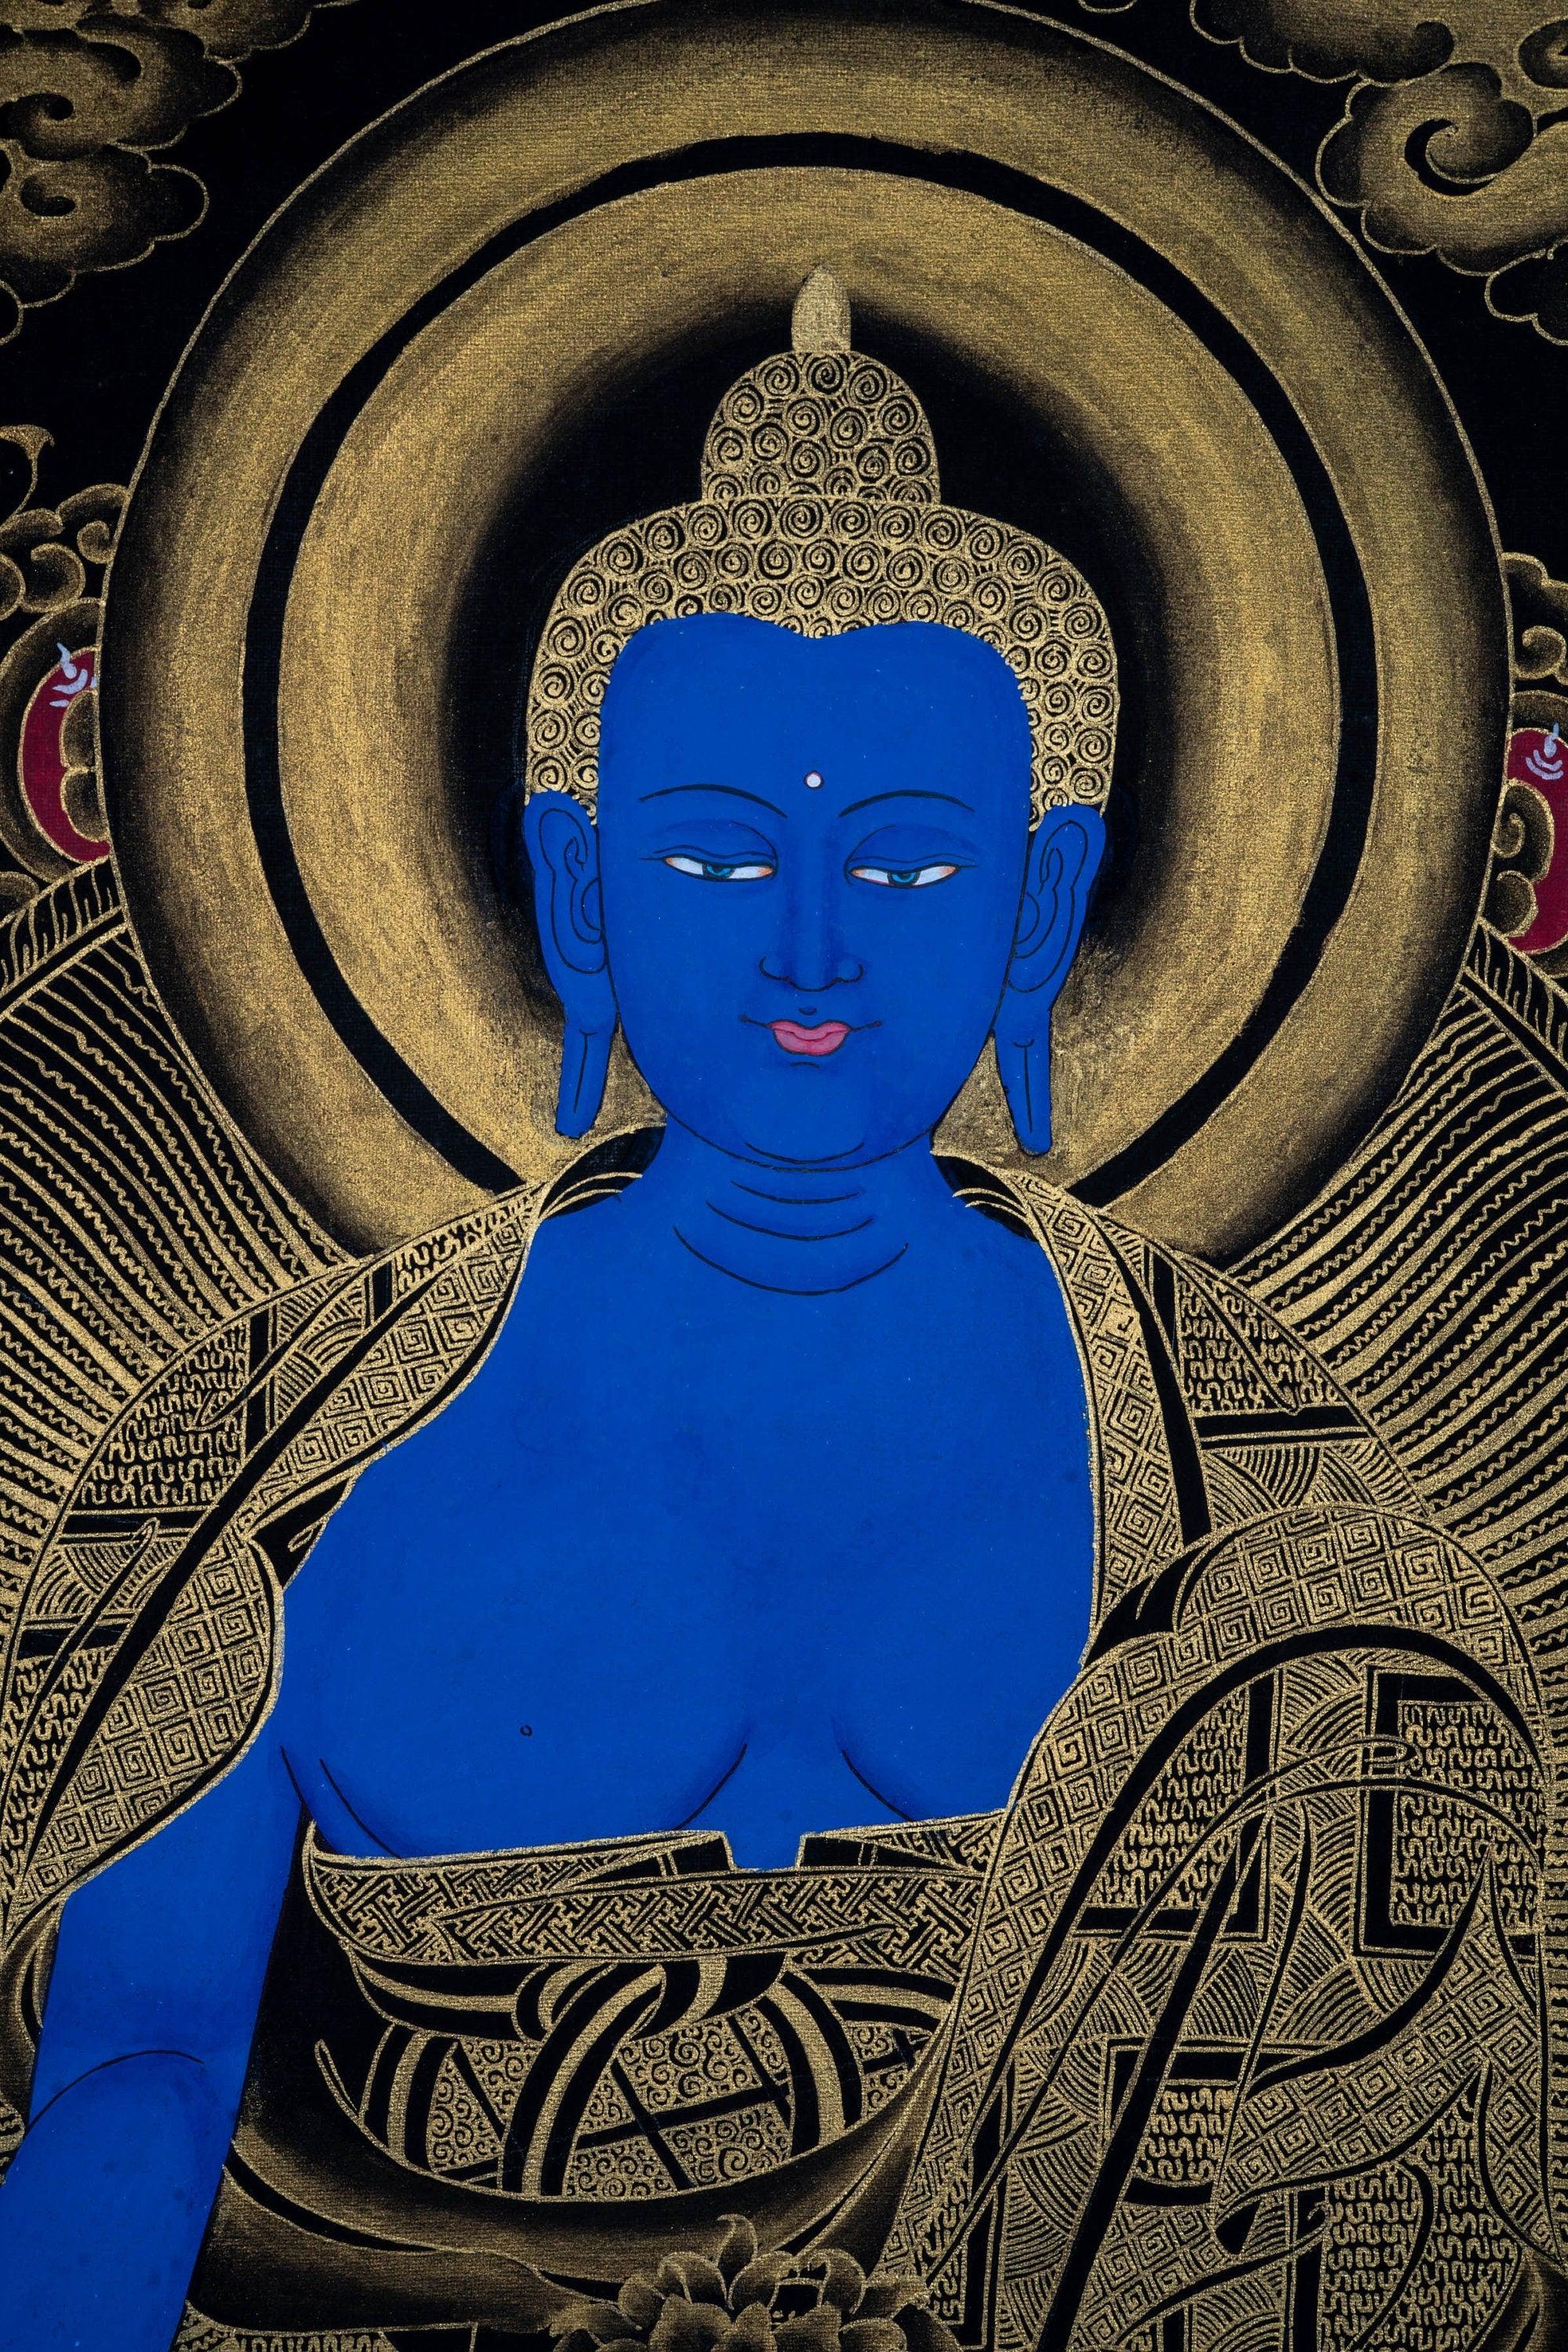 Medicine Buddha Painting on canvas